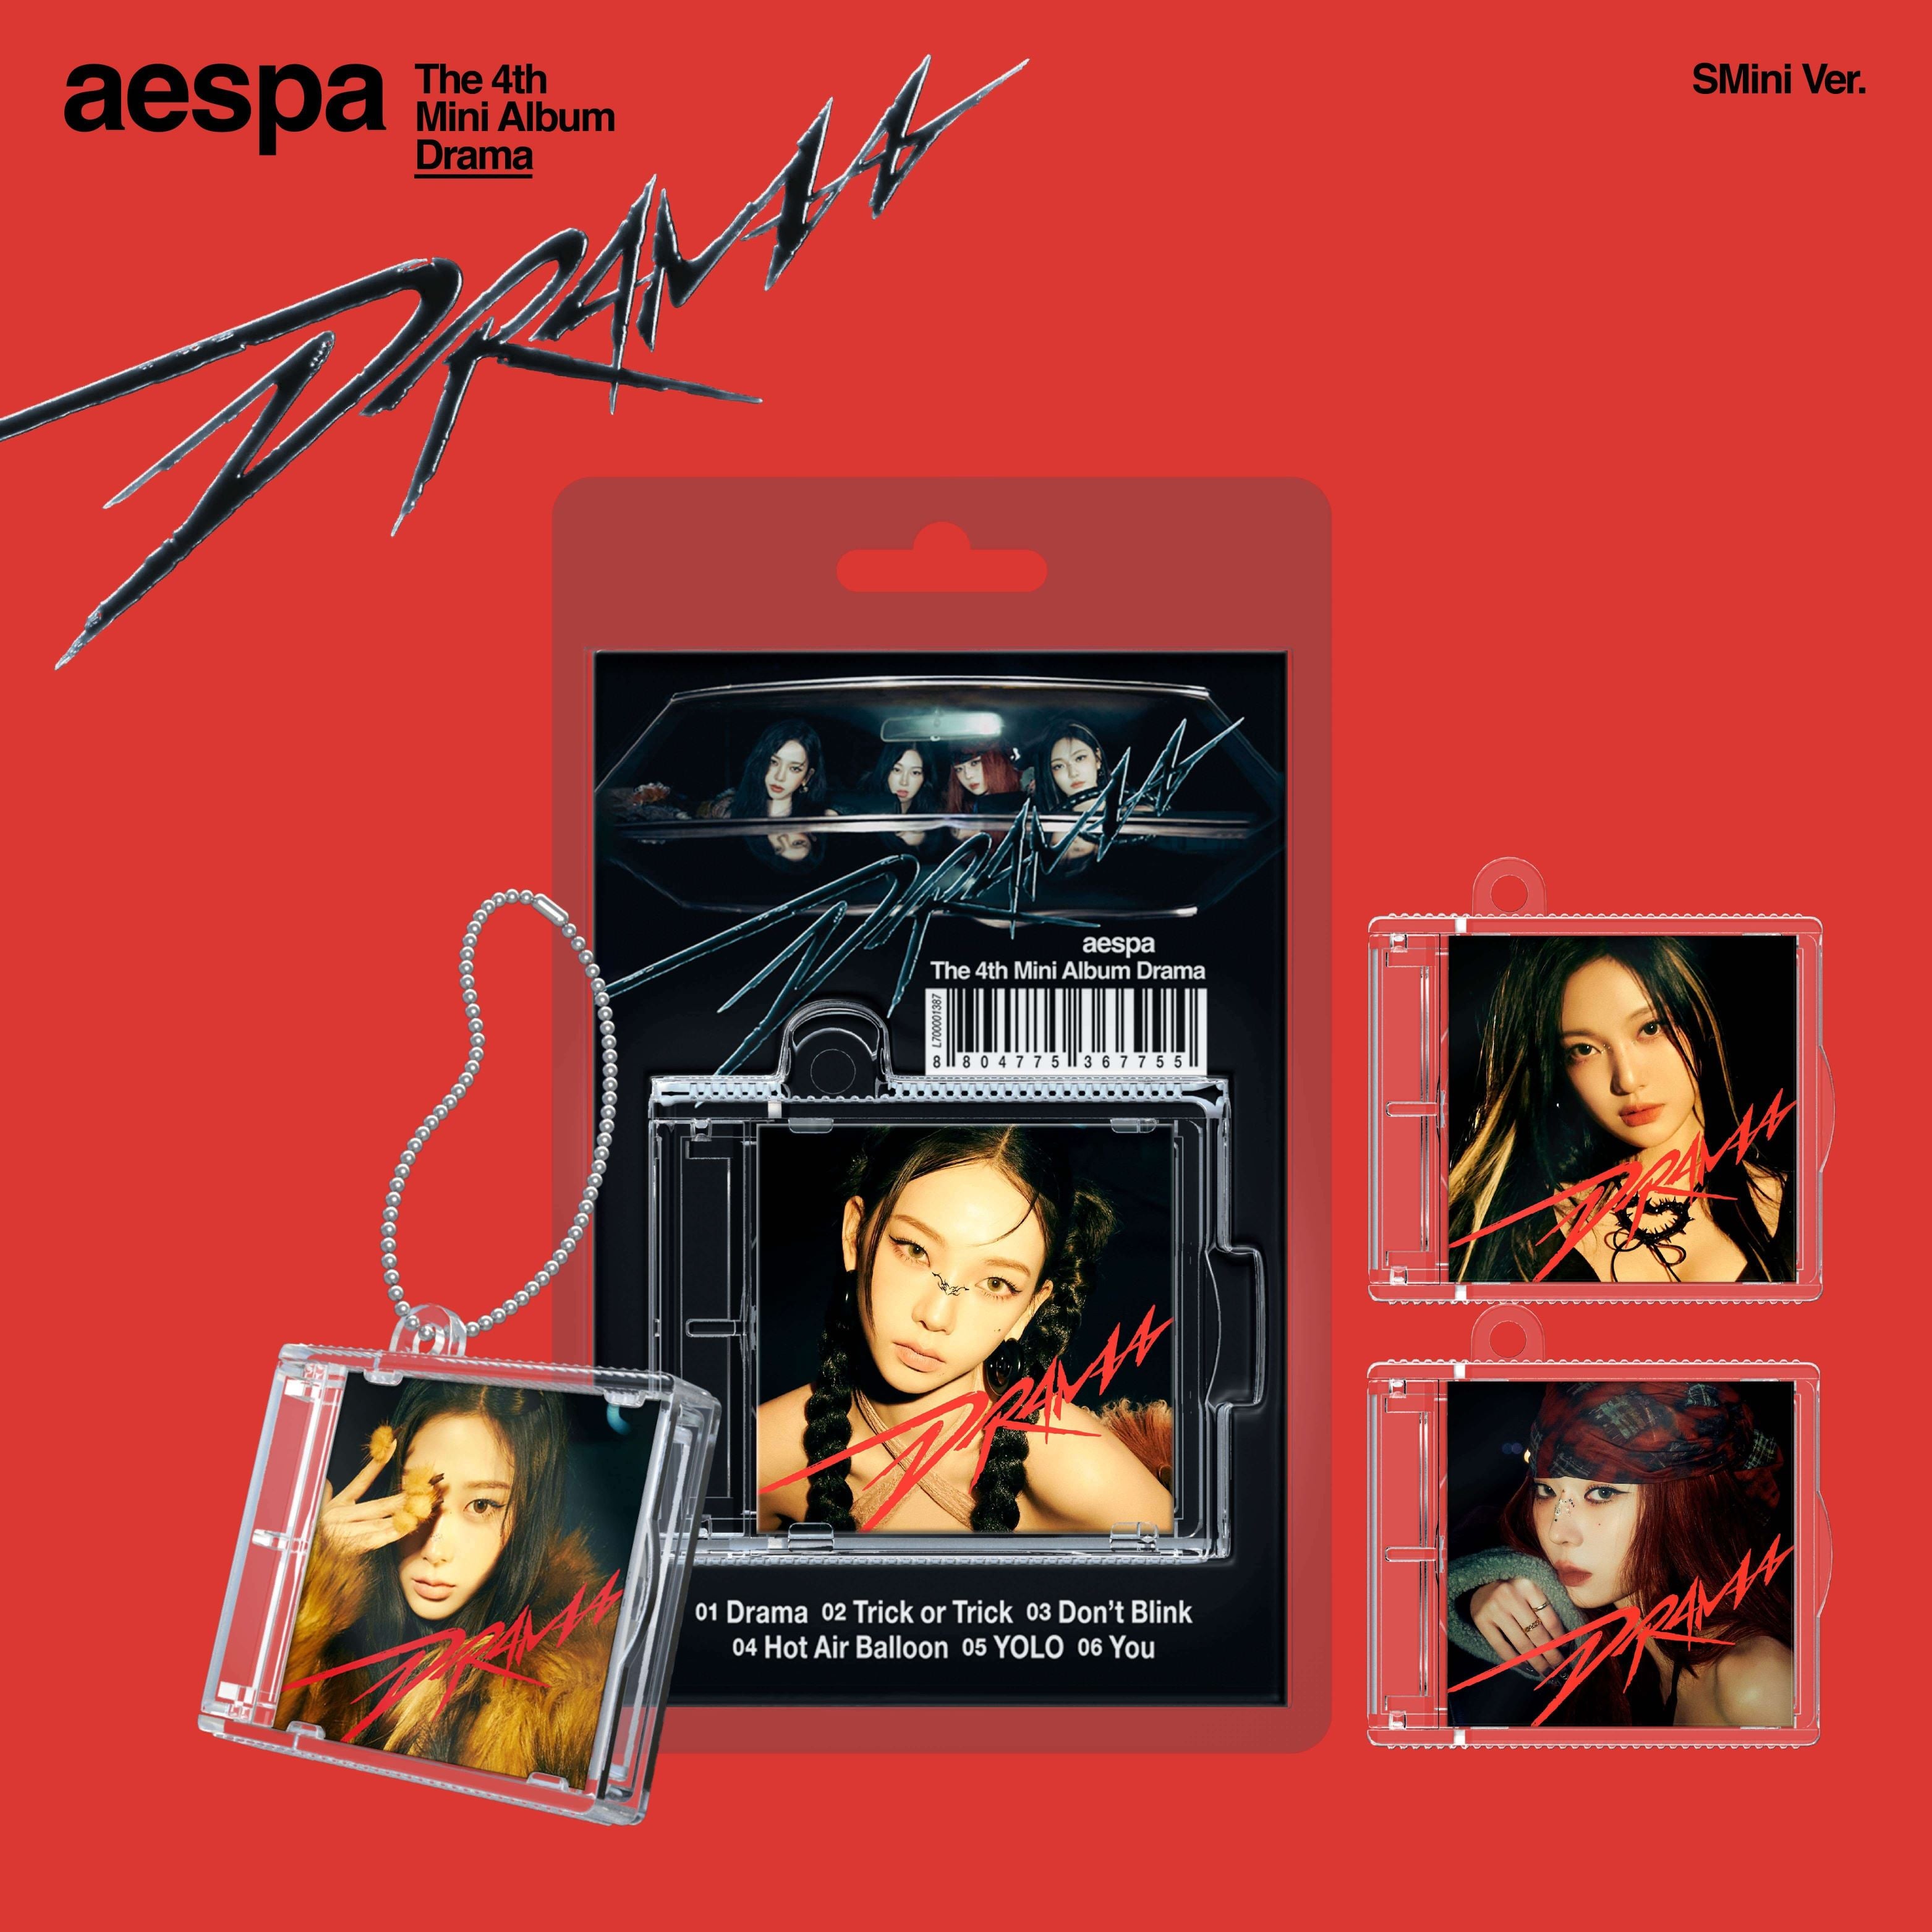 AESPA 4th Mini Album Drama (SMini Version)